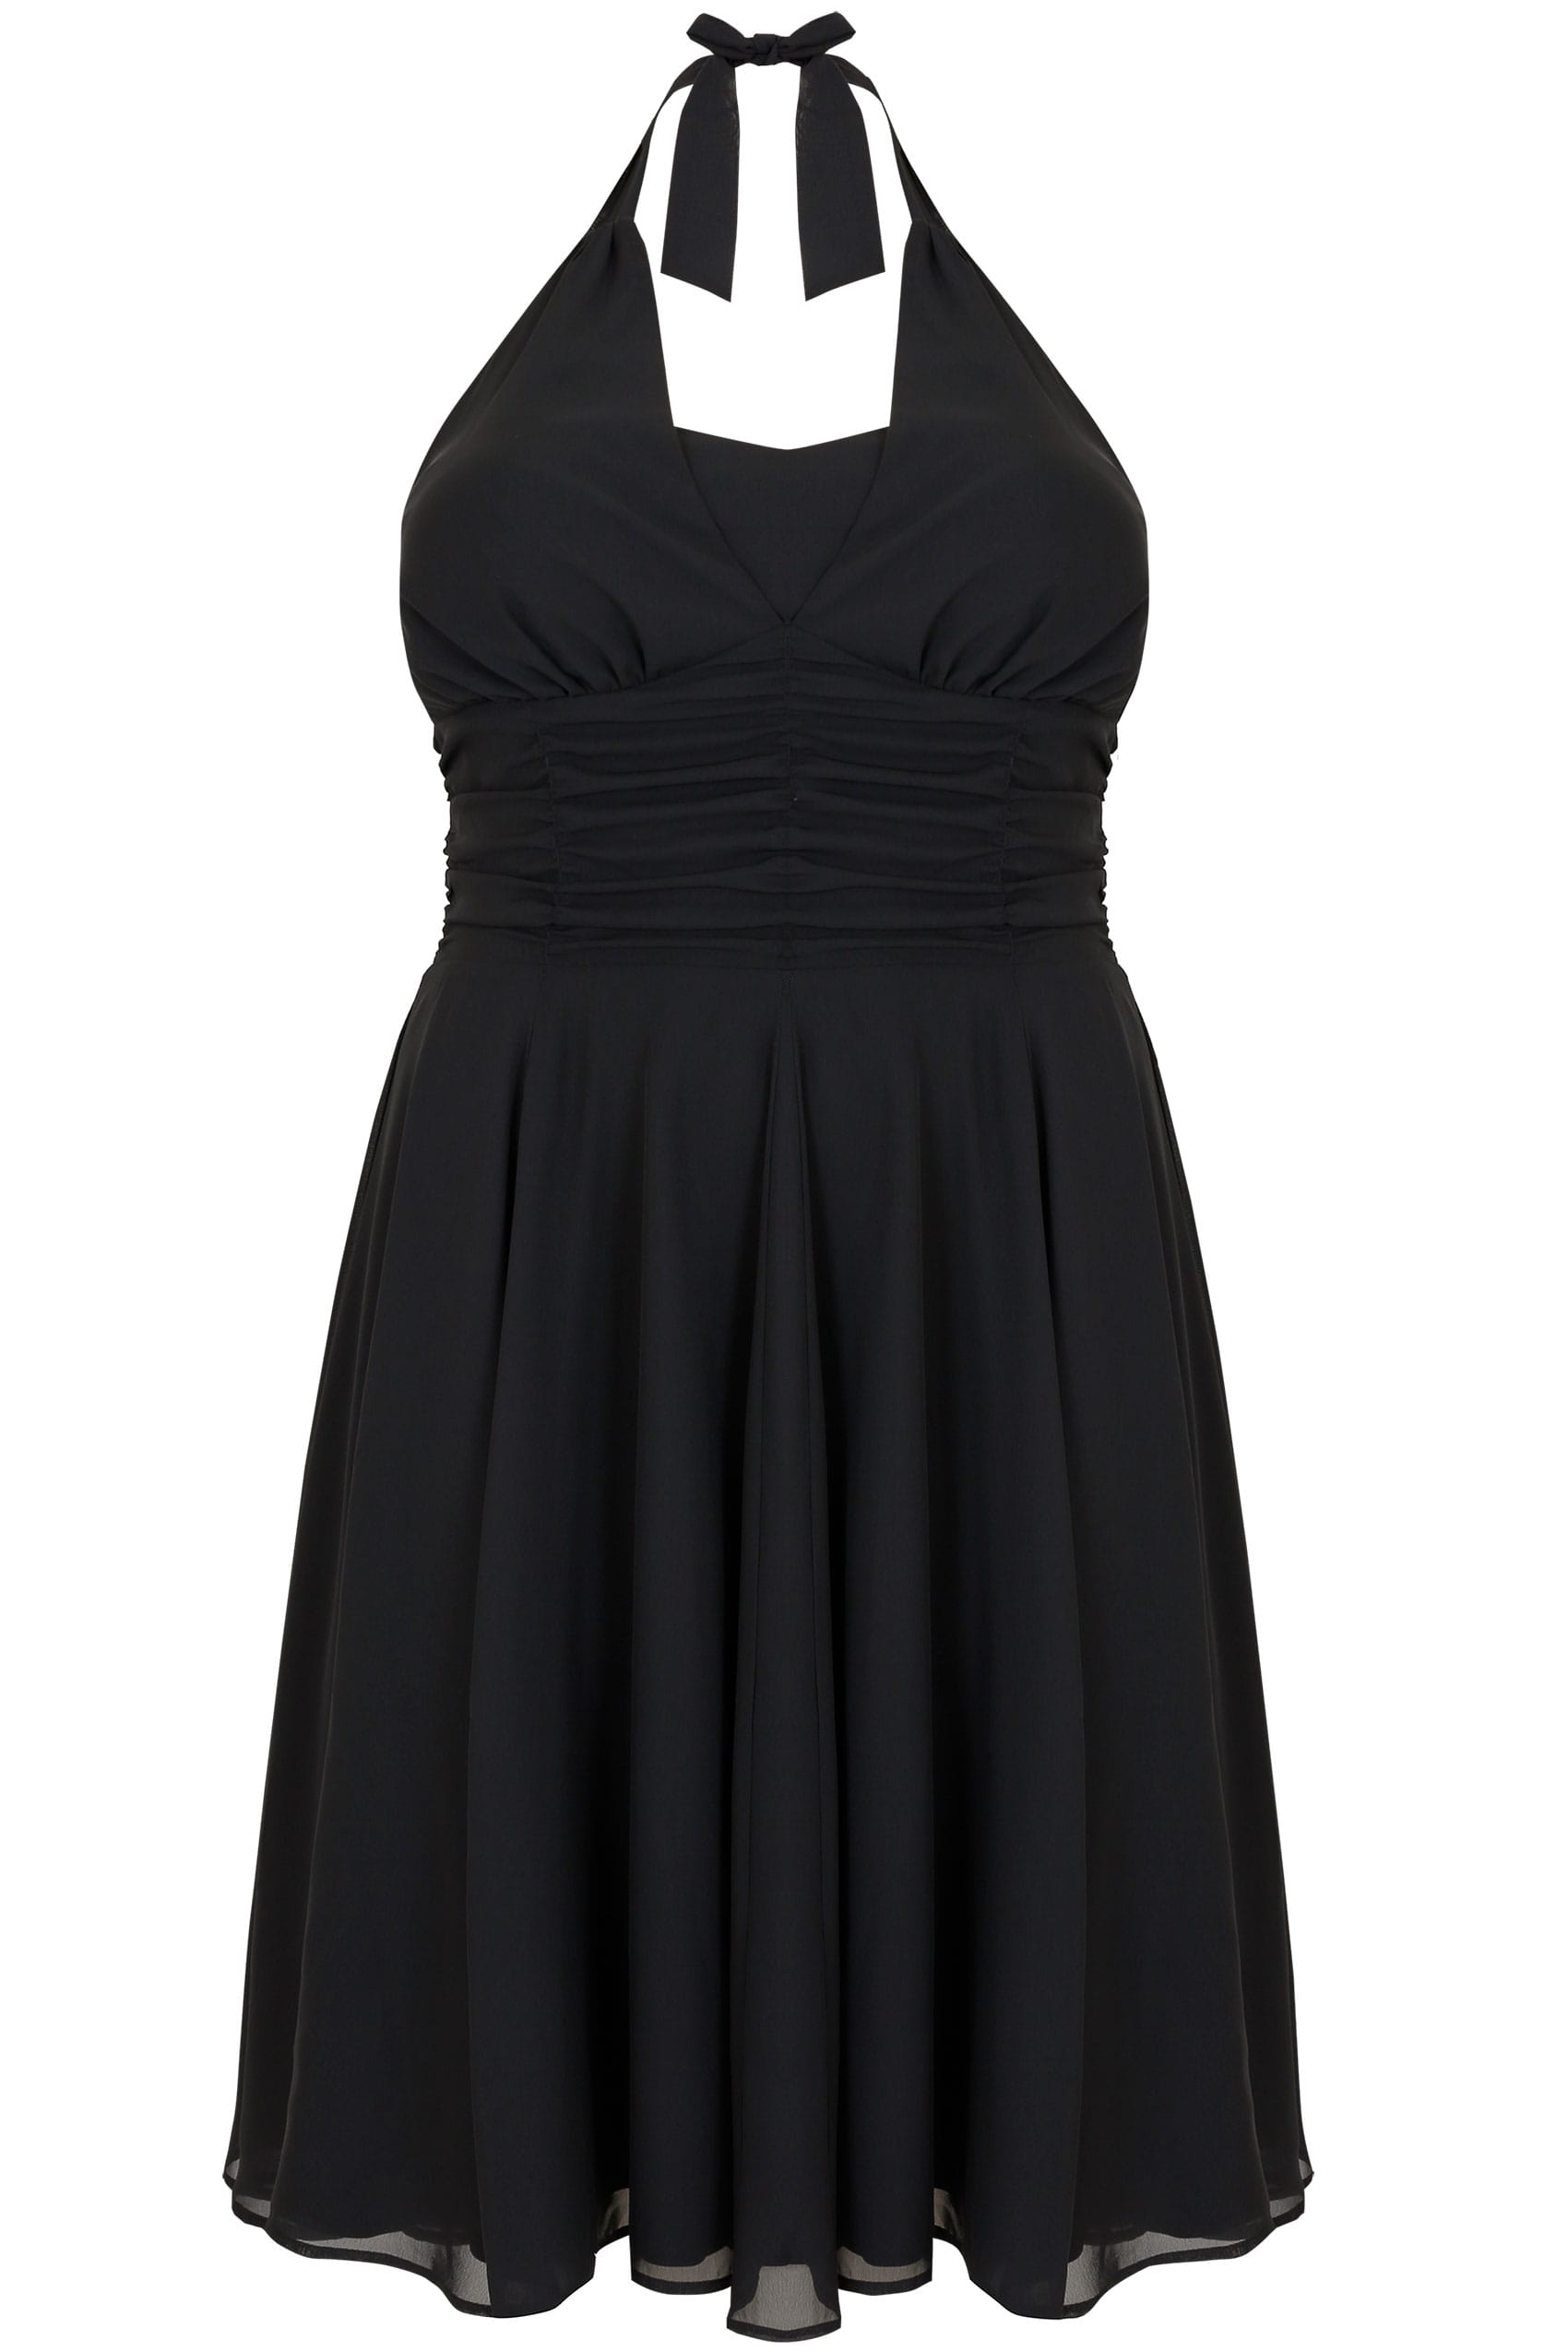 HELL BUNNY Black Ruched Chiffon 50s Style Monroe Halter Midi Dress plus ...